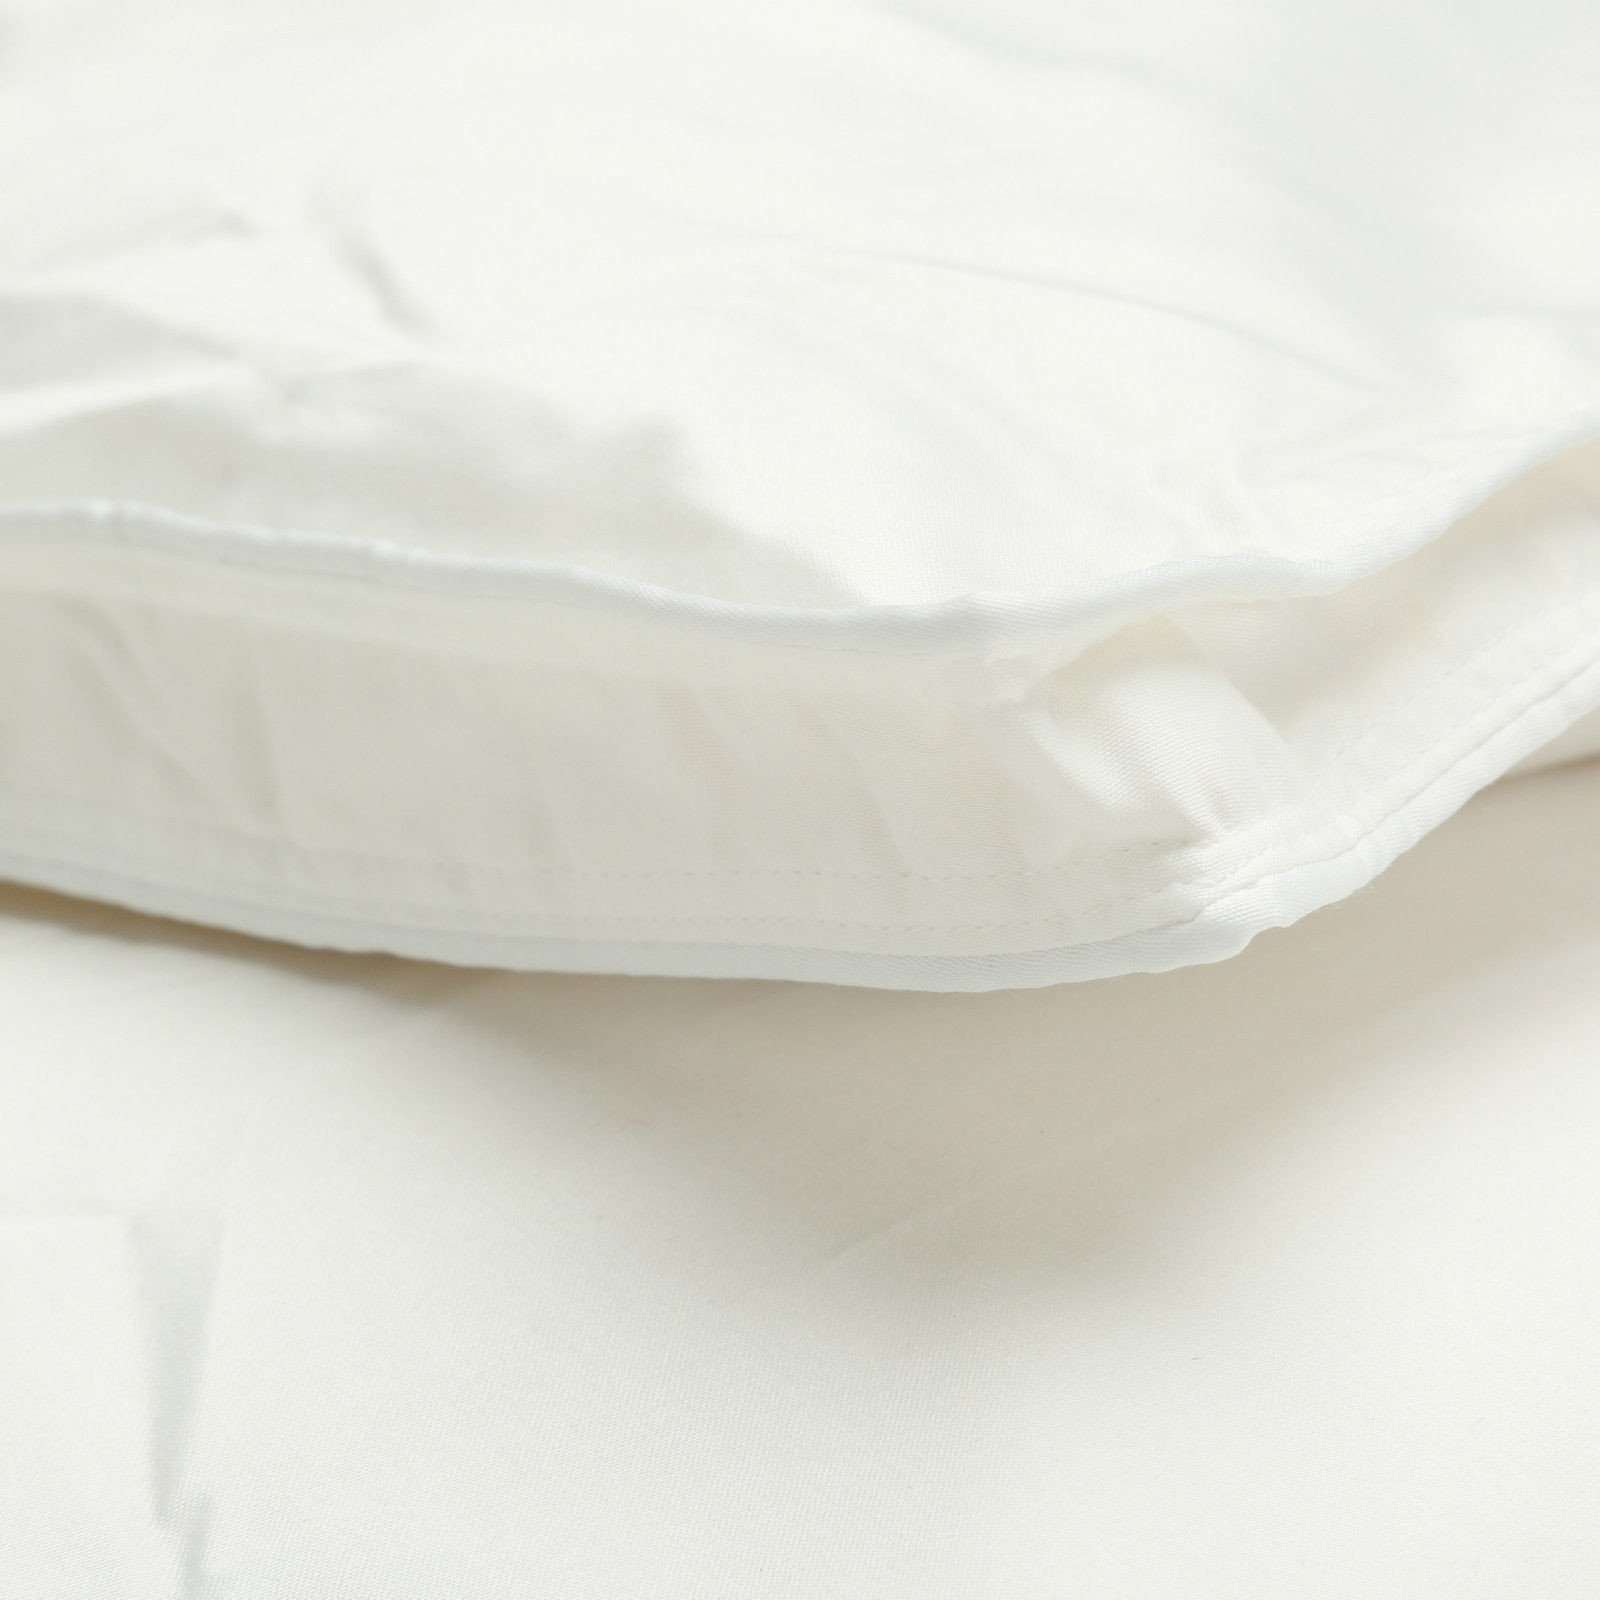 Premium-Quality-Silk-Cover-Double-Bed-Duvet